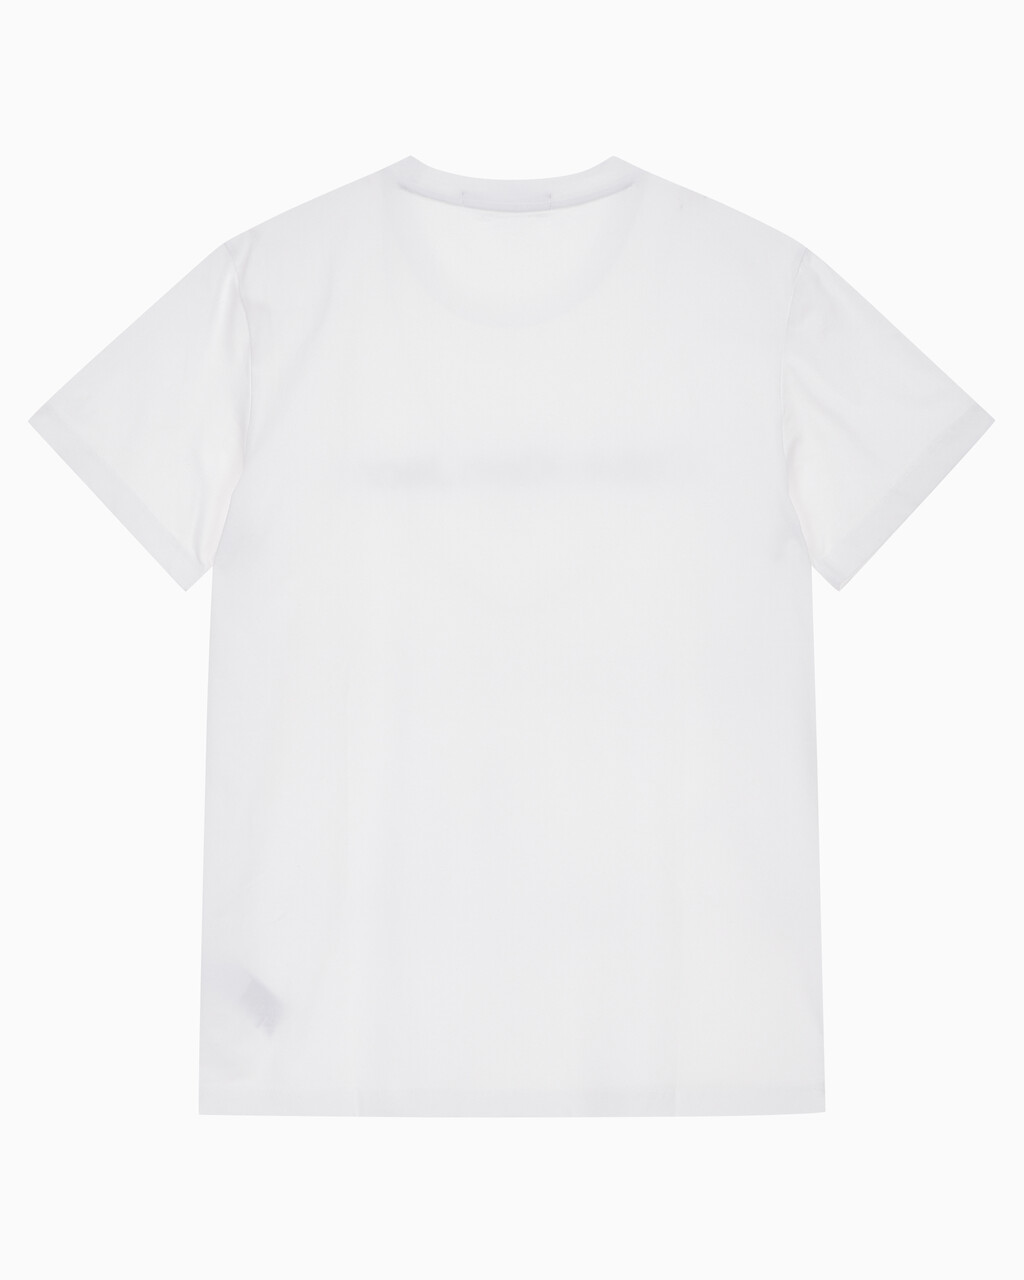 Buy 남성 레귤러핏 인스티튜셔널 로고 스트레치 반팔 티셔츠 in color BRIGHT WHITE